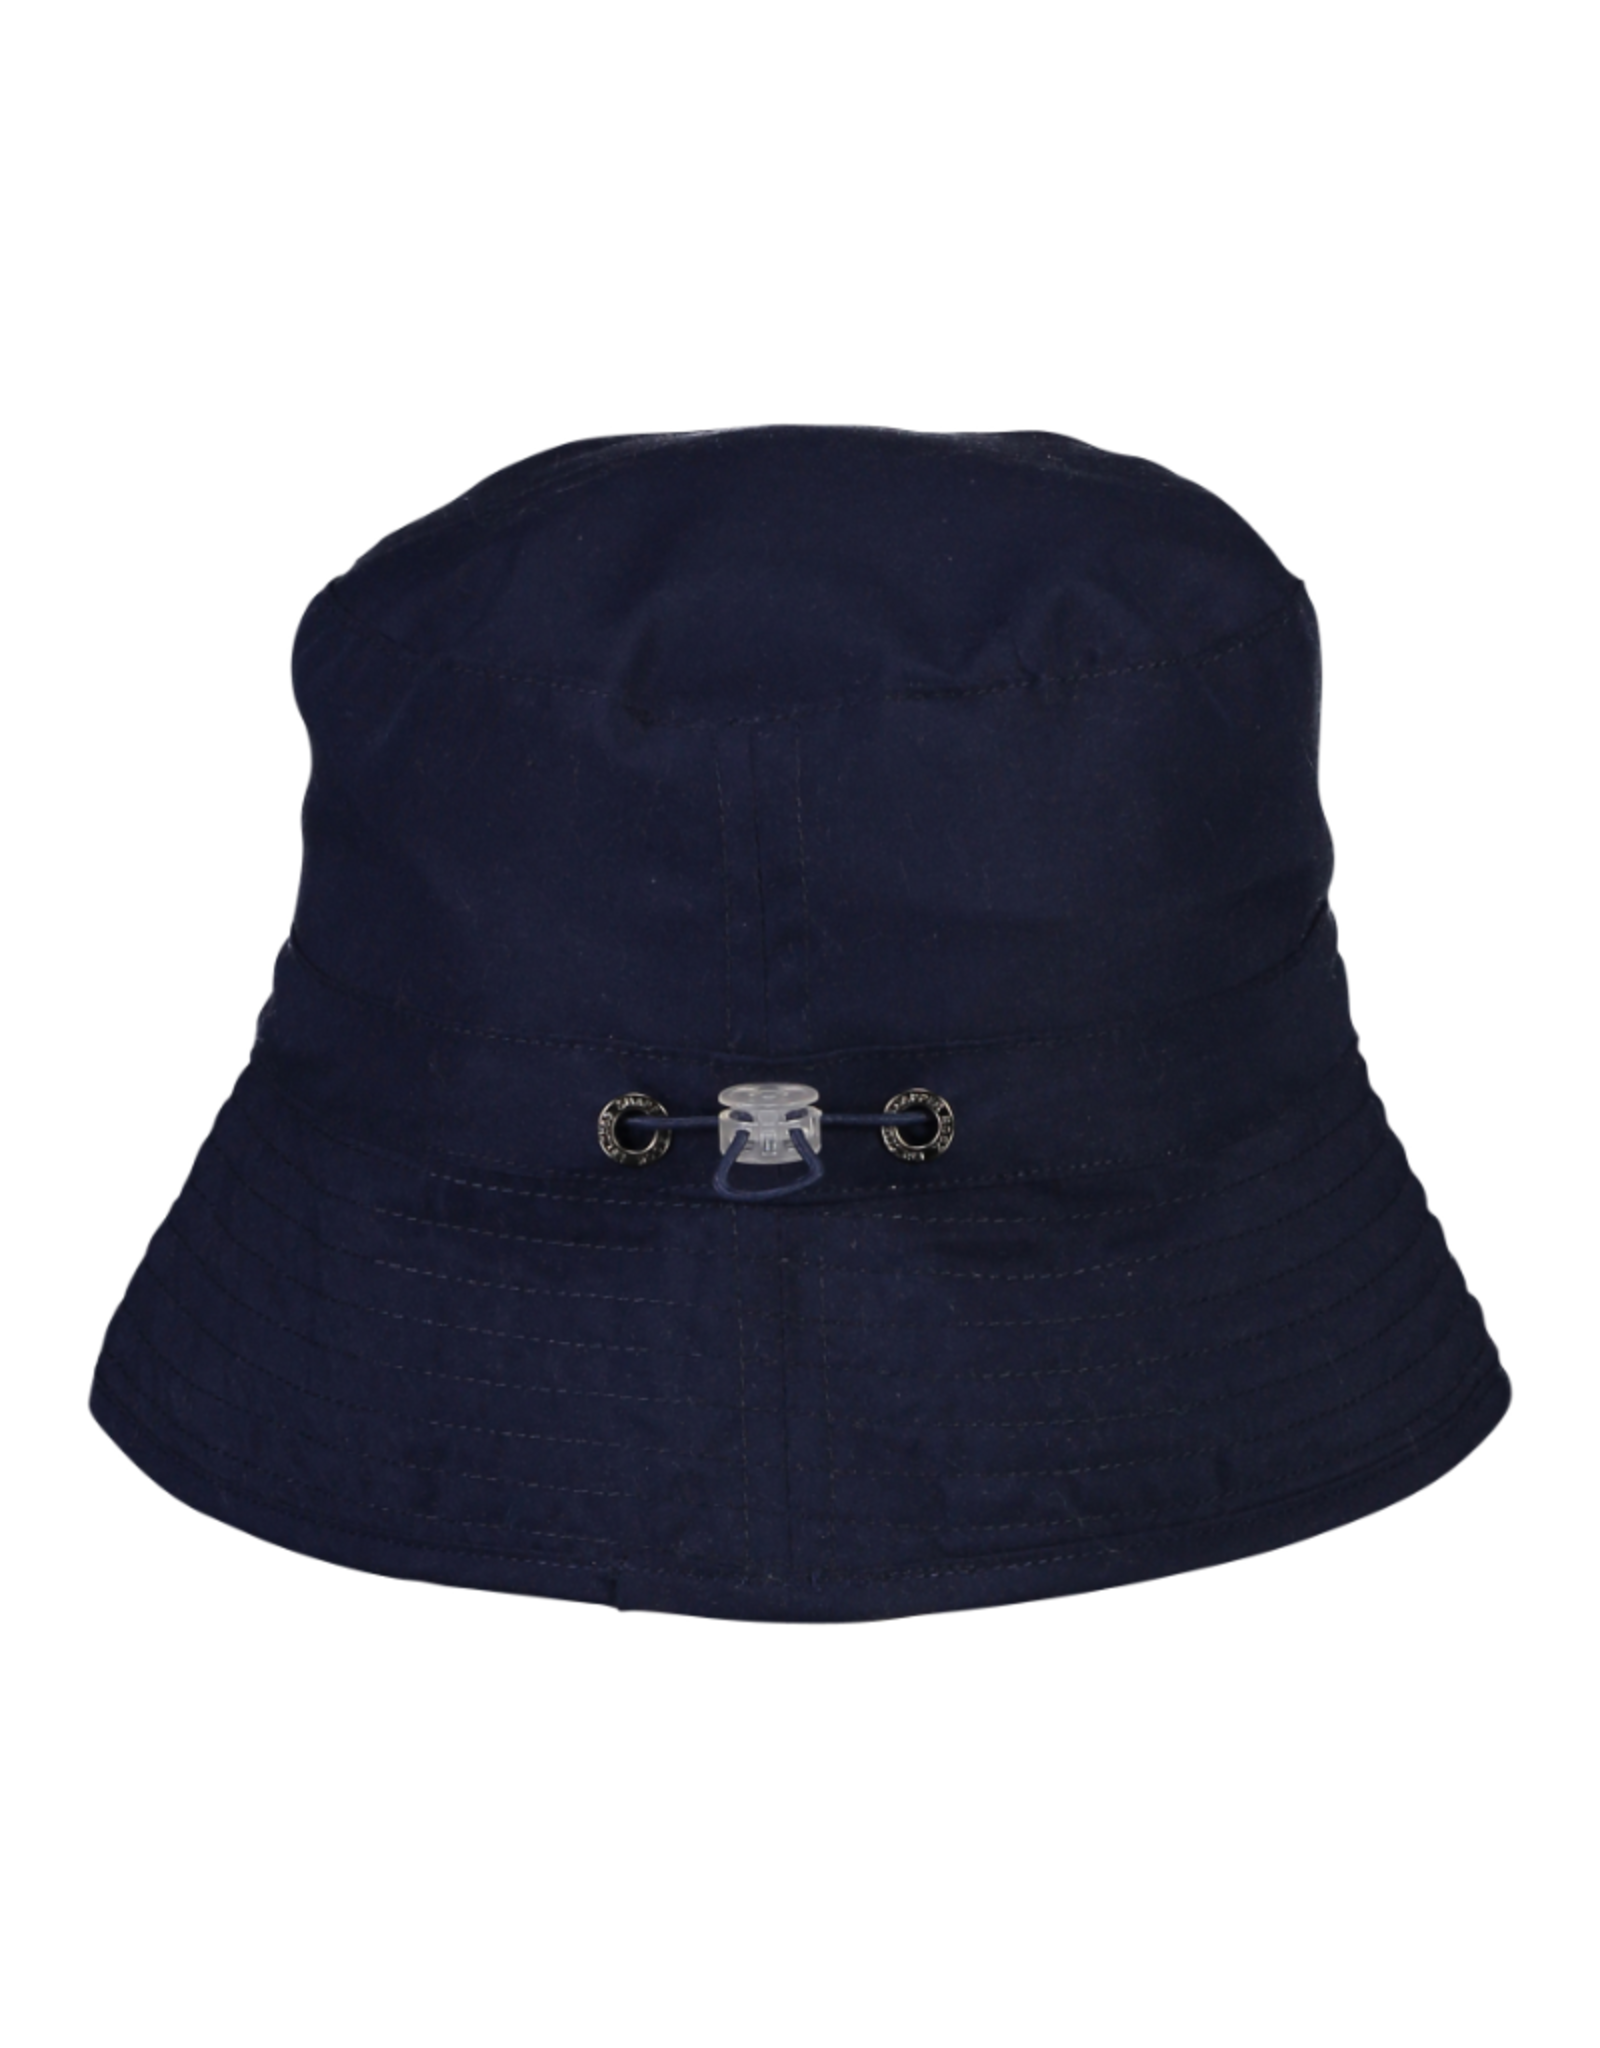 SR Kids UV50 Bucket Hat